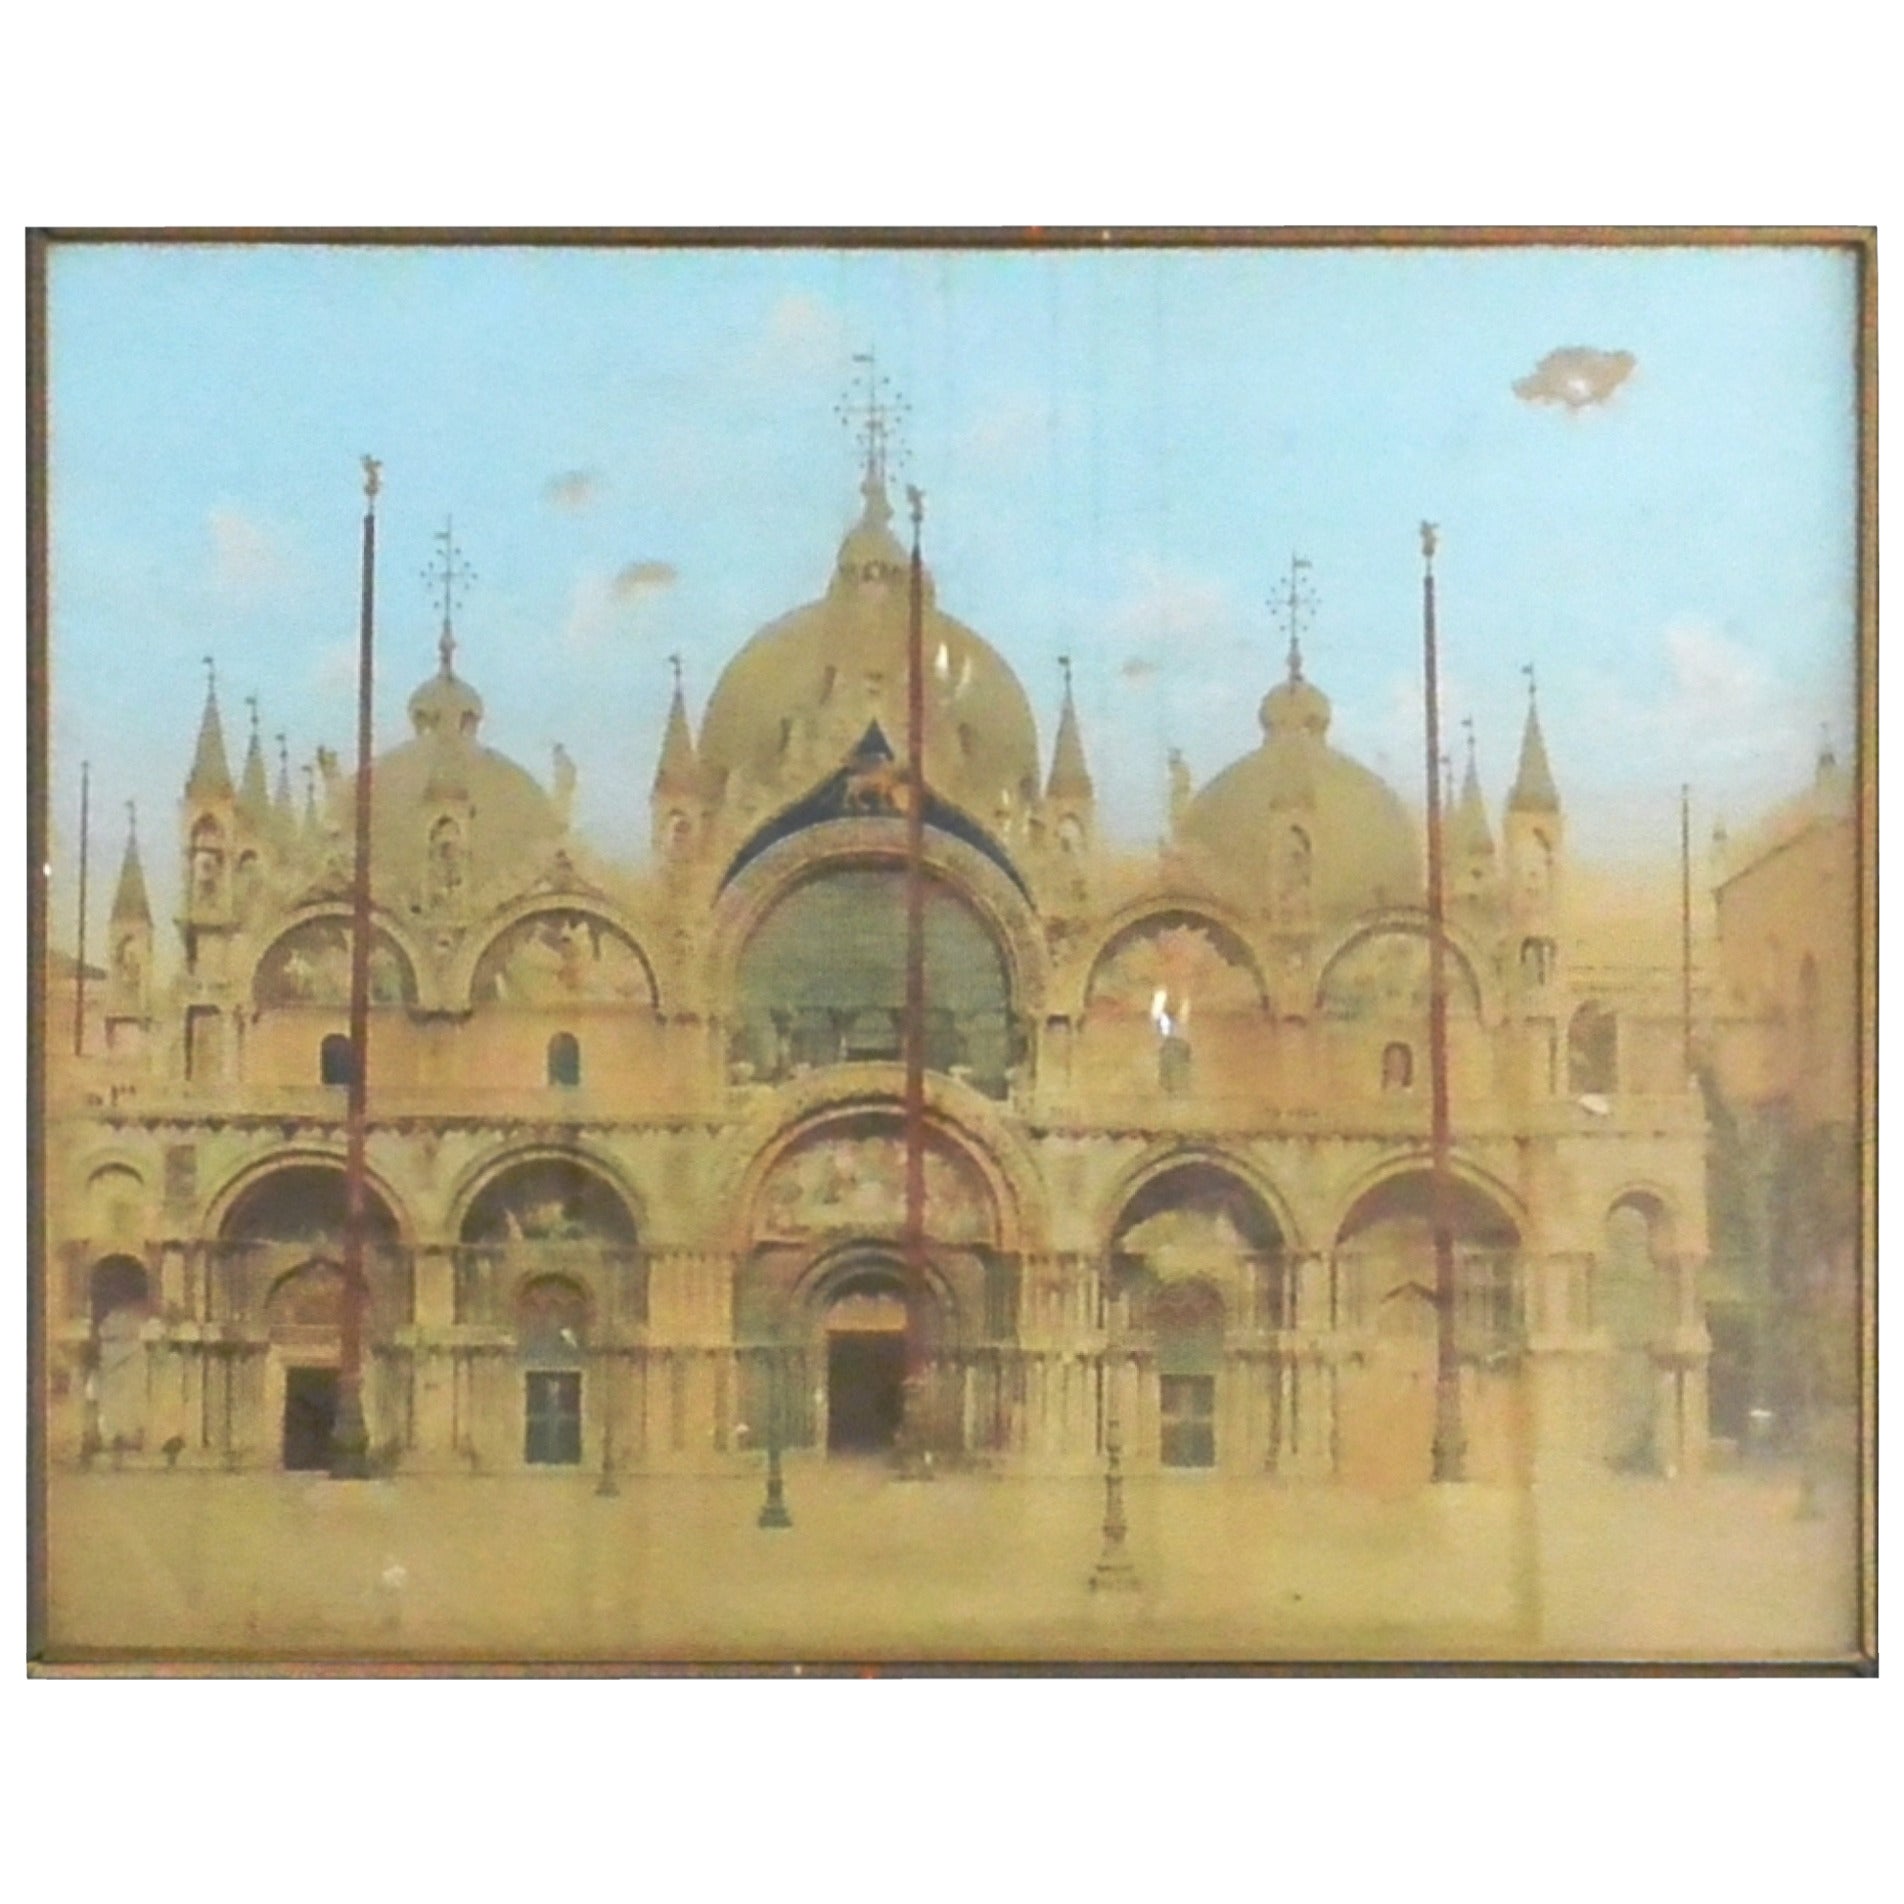 Aquatint of St. Mark's in Venice